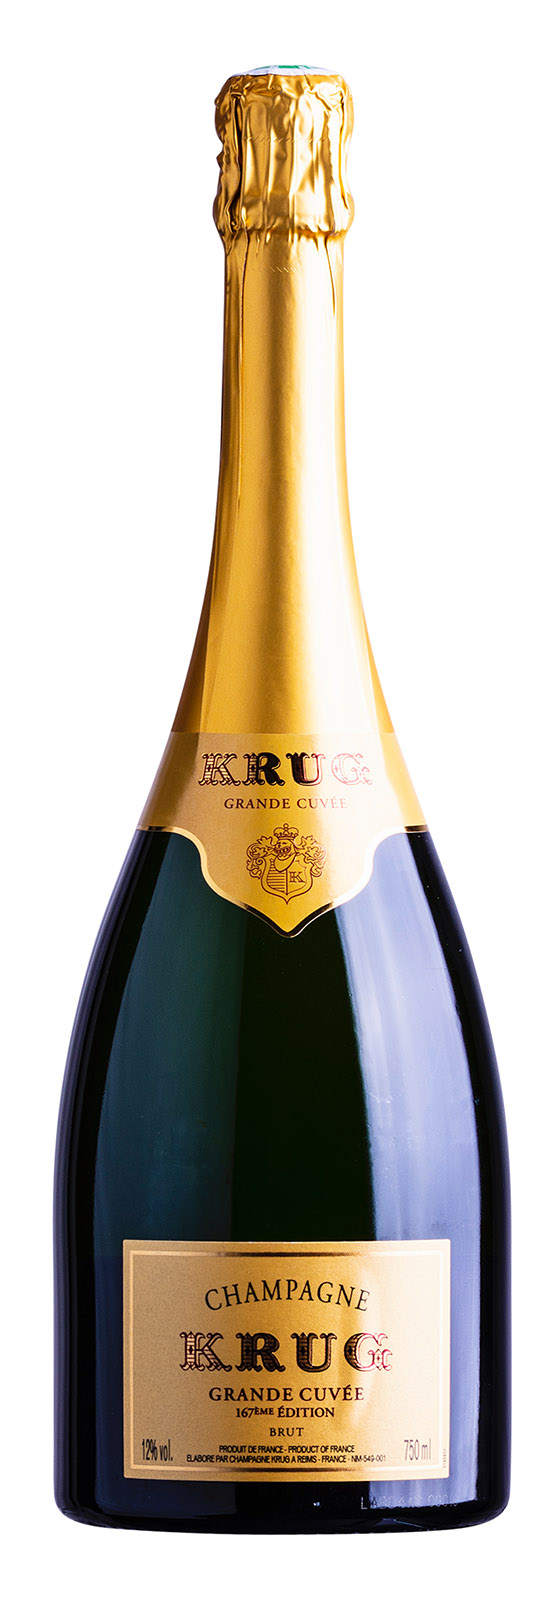 Champagne AOC Krug Grande Cuvée 167e Edition 0